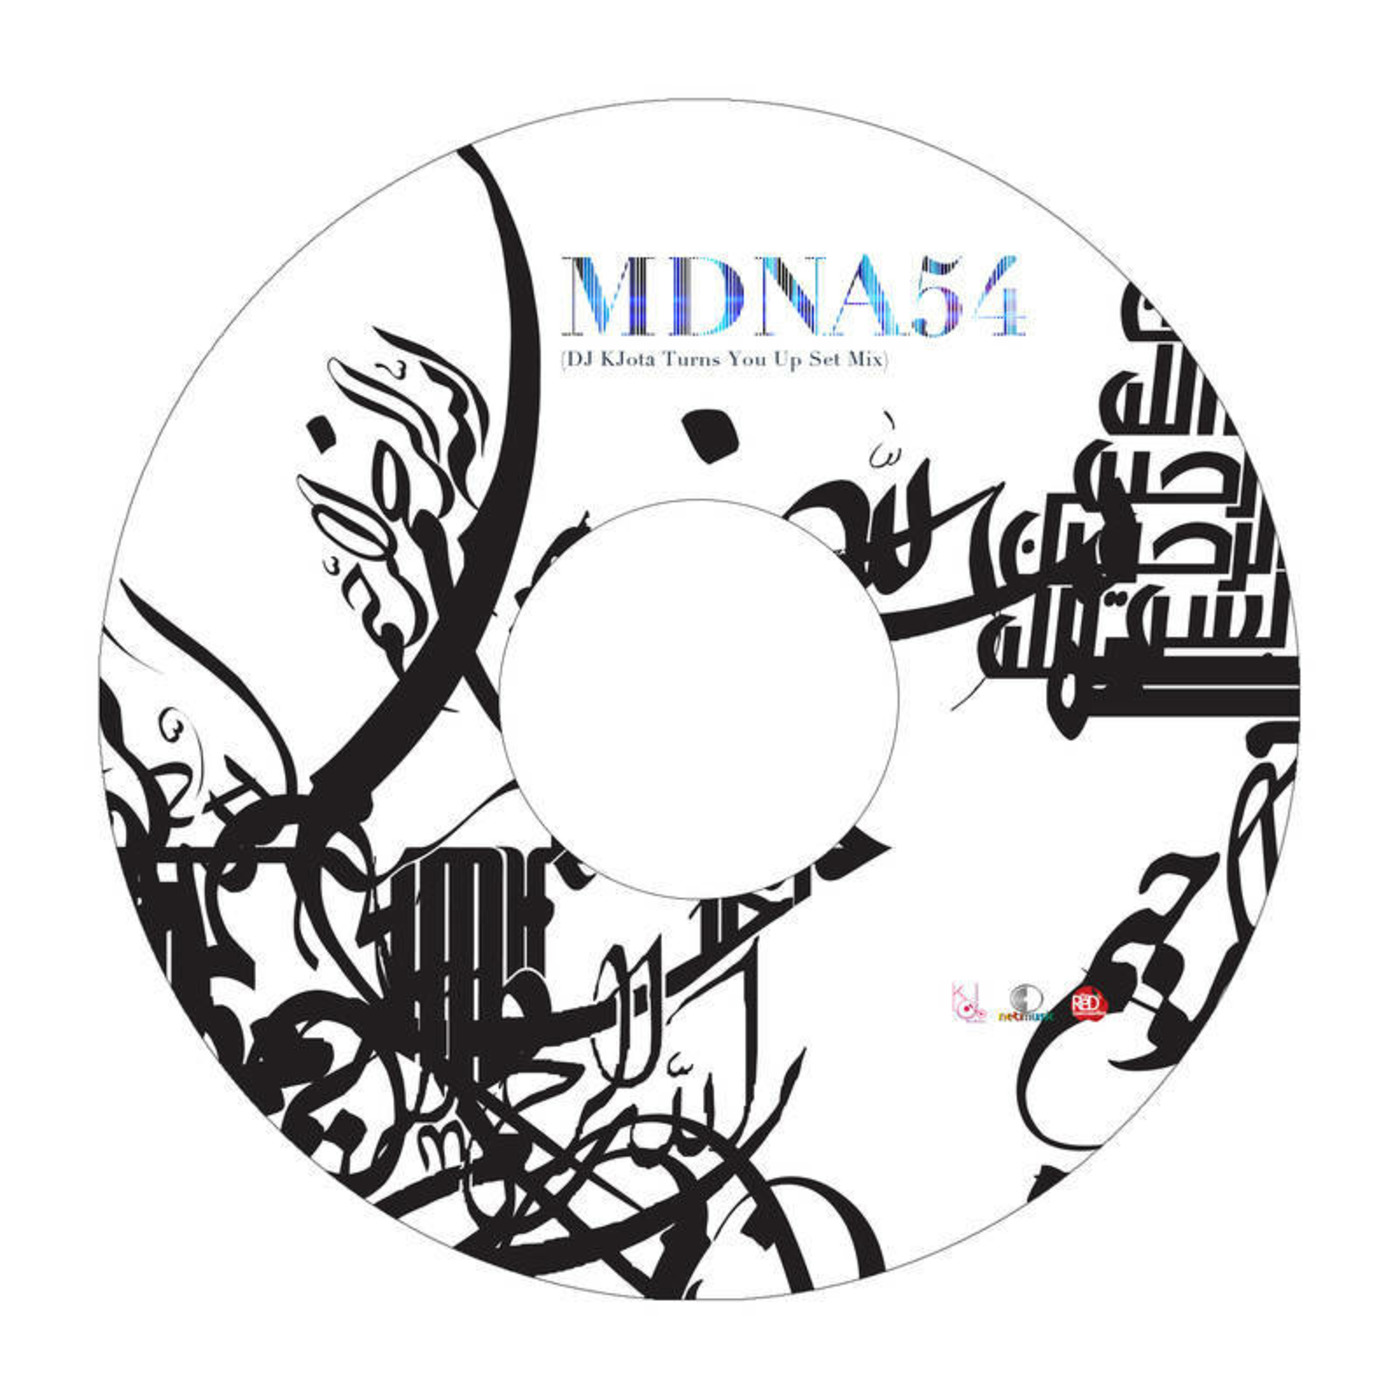 MDNA 54 (DJ KJota Turns You Up Set Mix)